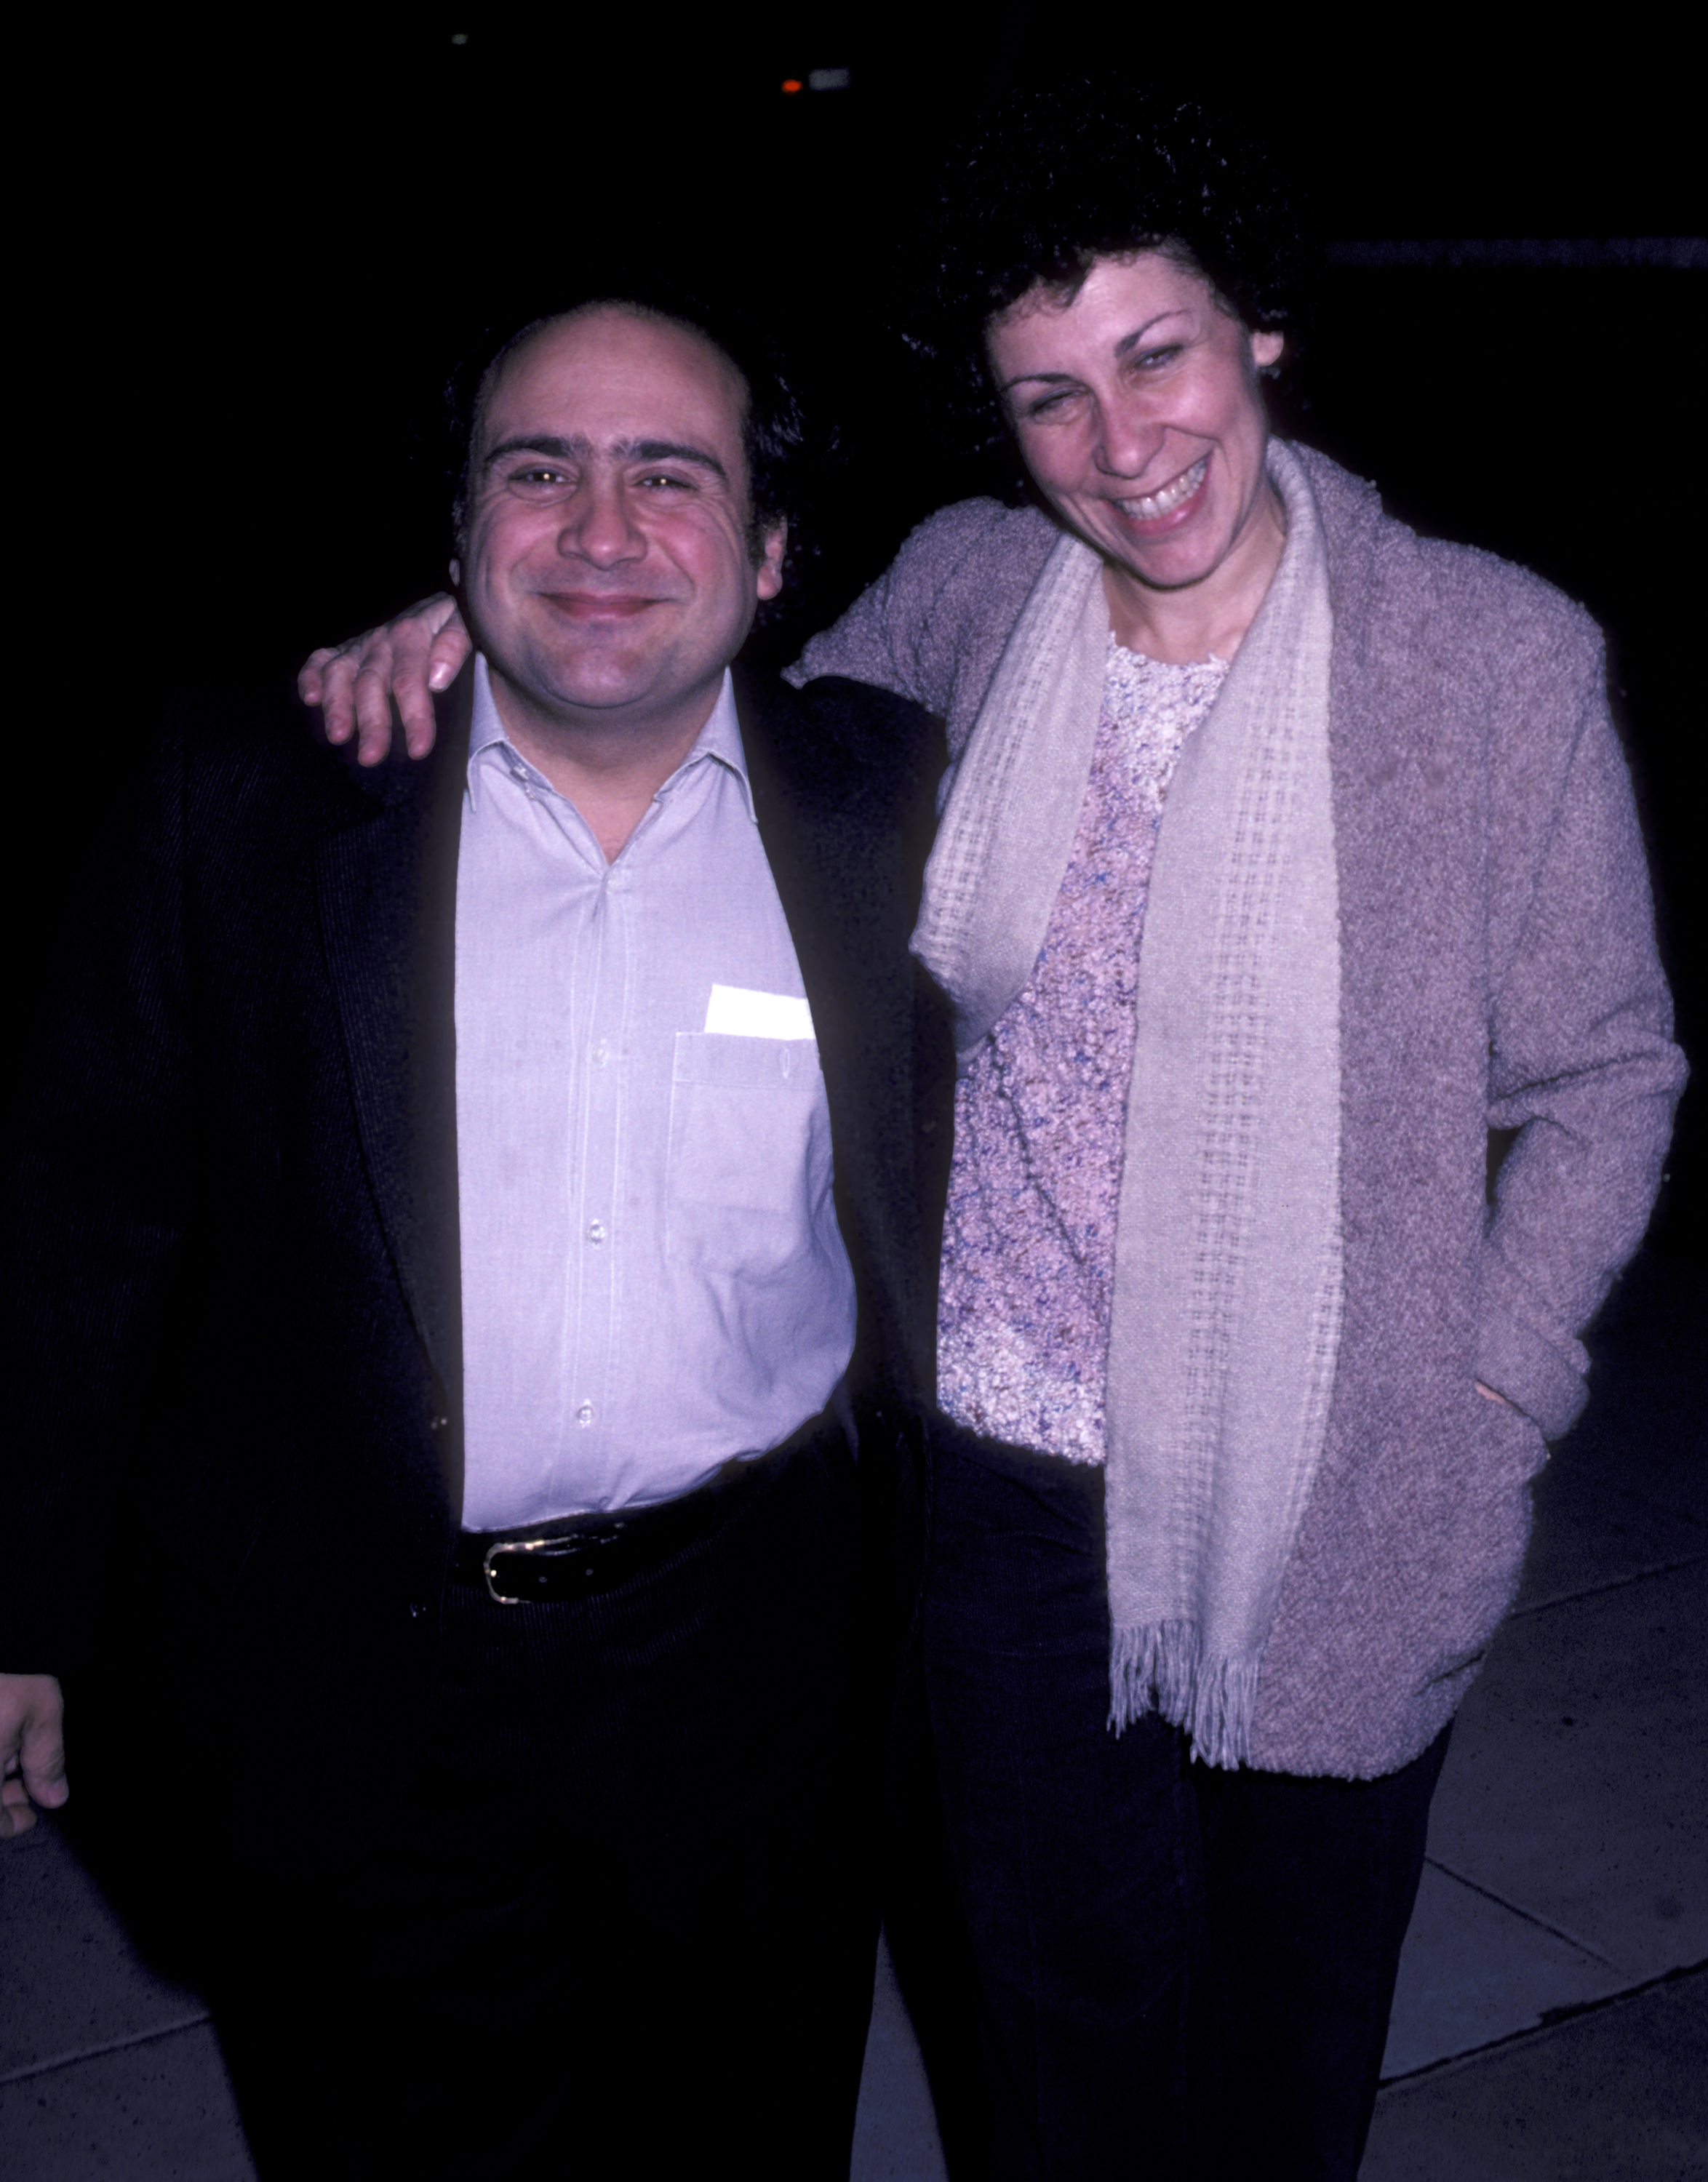 Danny DeVito and Rhea Perlman in California in 1982 | Source: Getty Images 